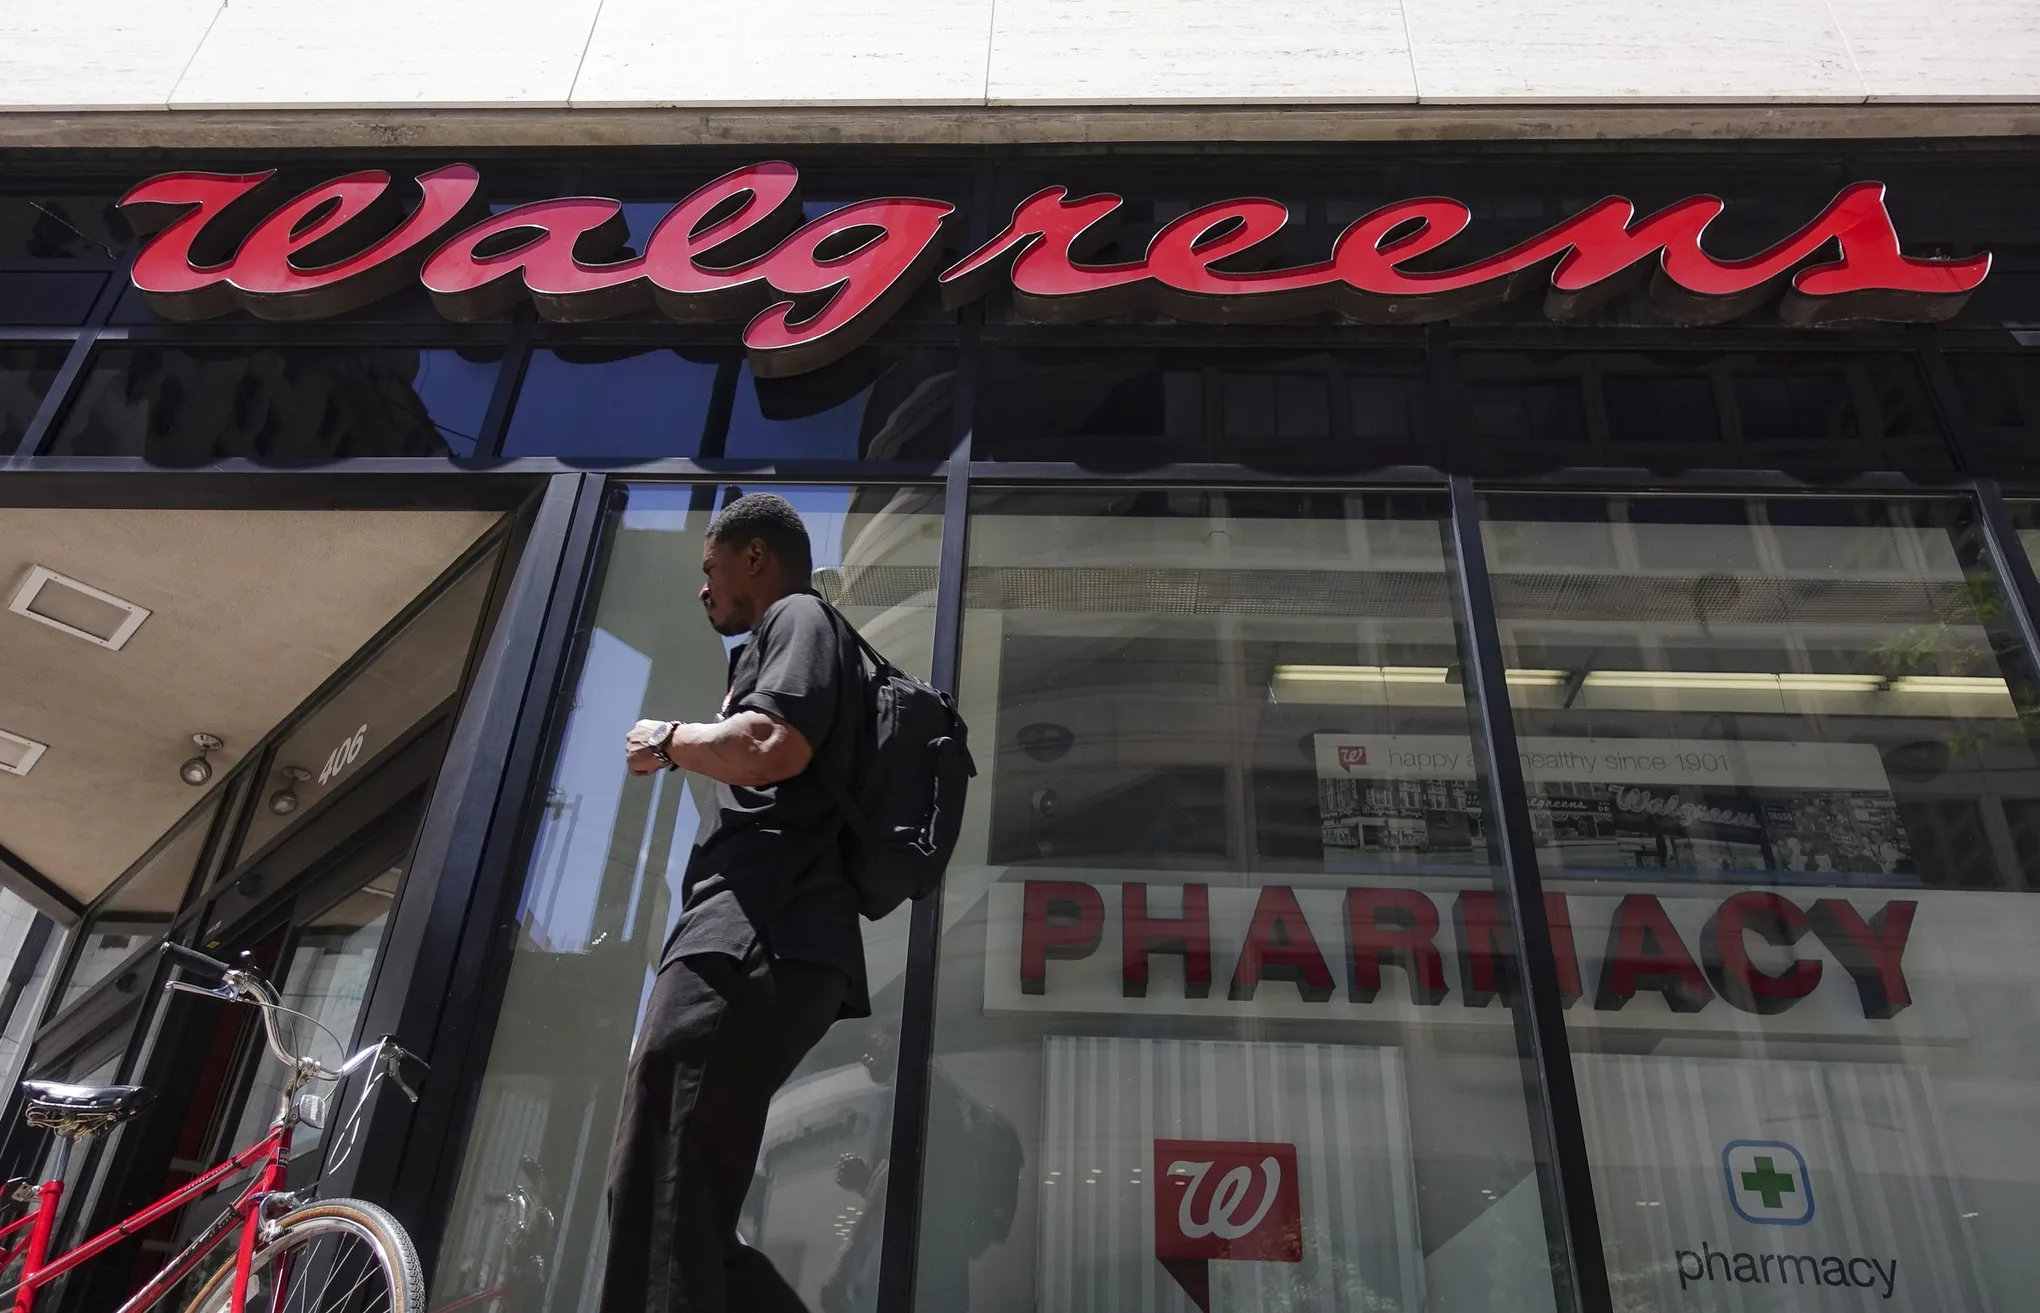 Walgreens To Close 160 VillageMD Clinics After Hitting a Financial Loss of $6 Billion